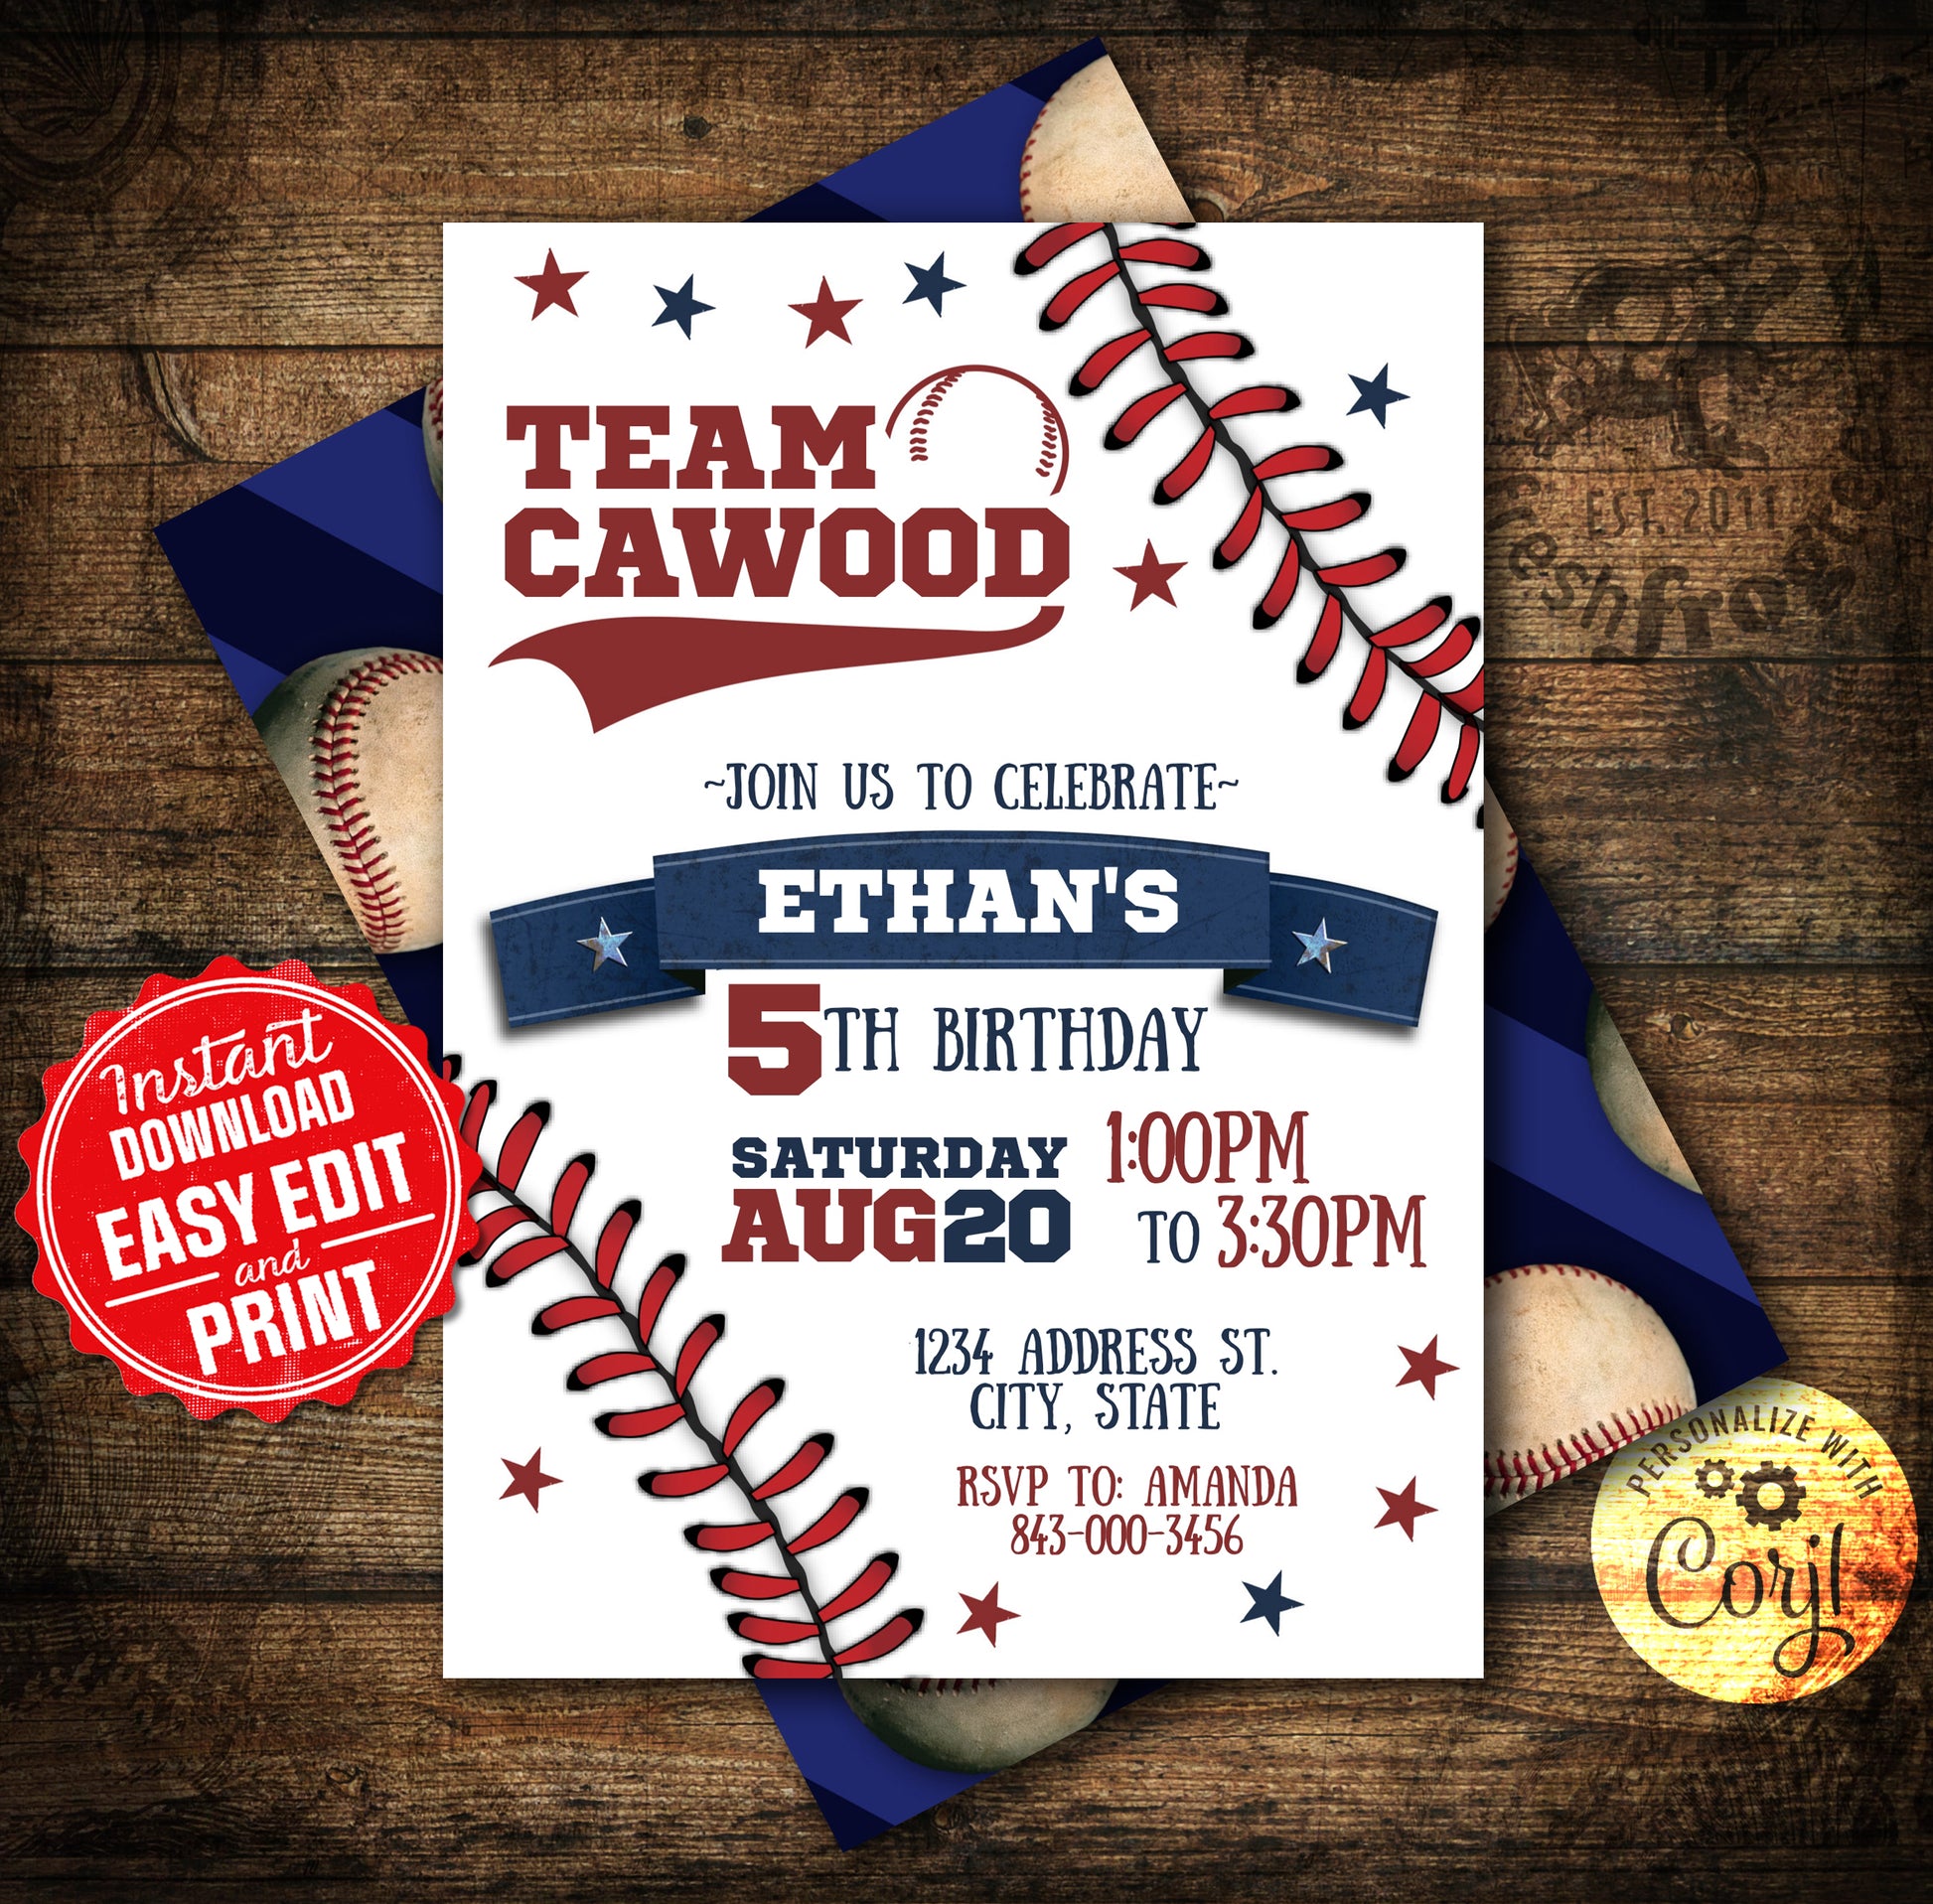 Personalized team name baseball invitation